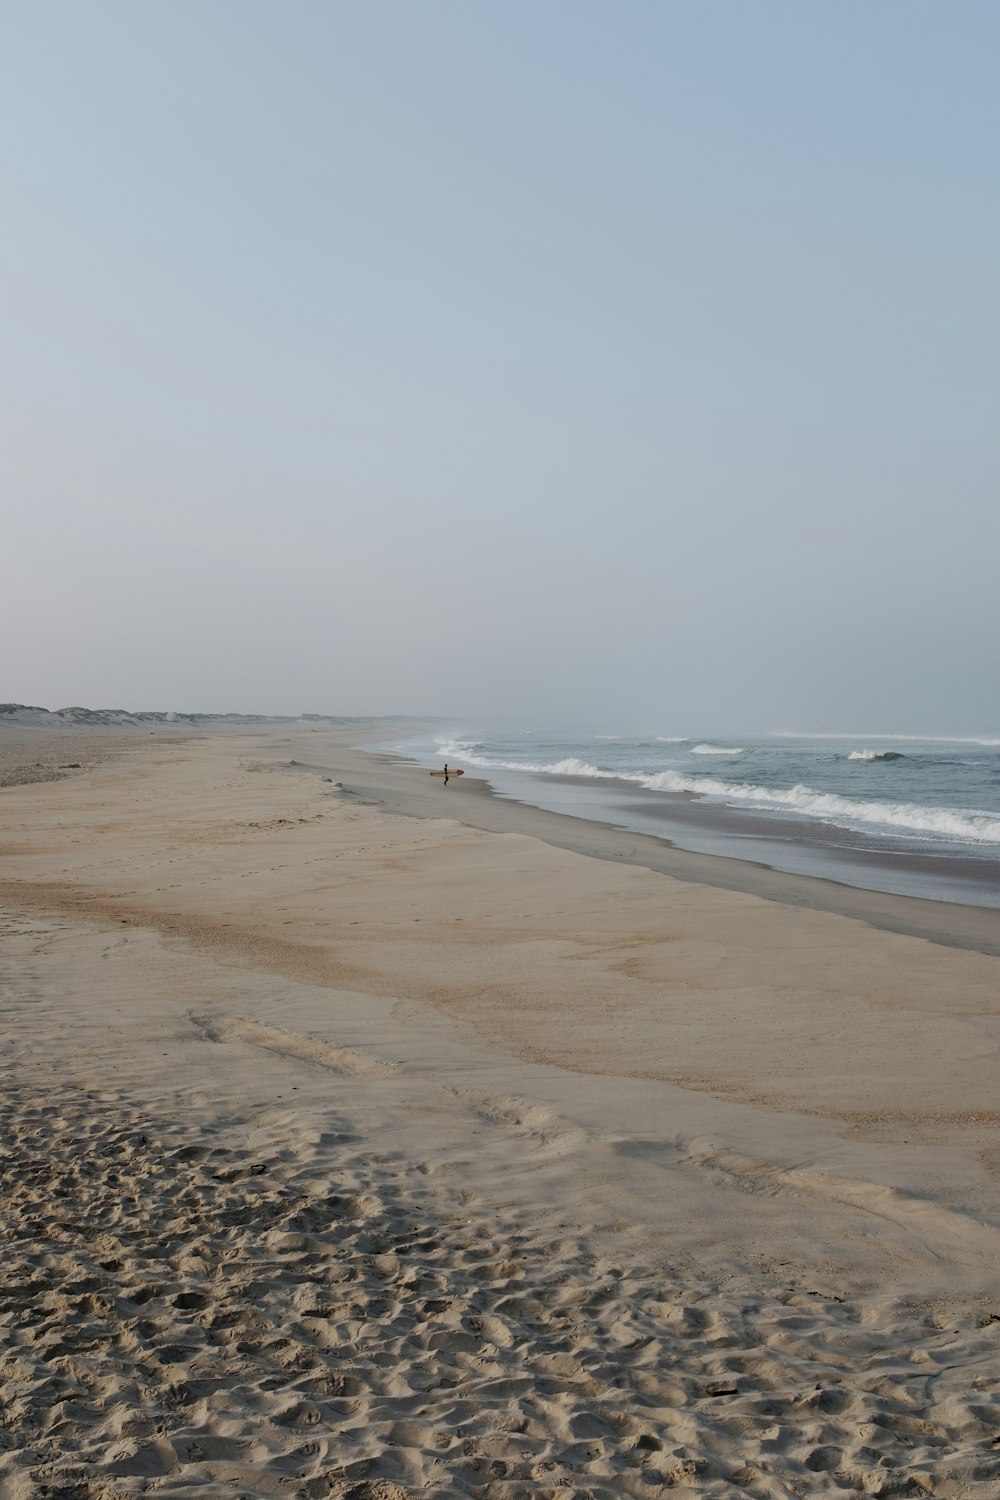 a person walking along a sandy beach next to the ocean